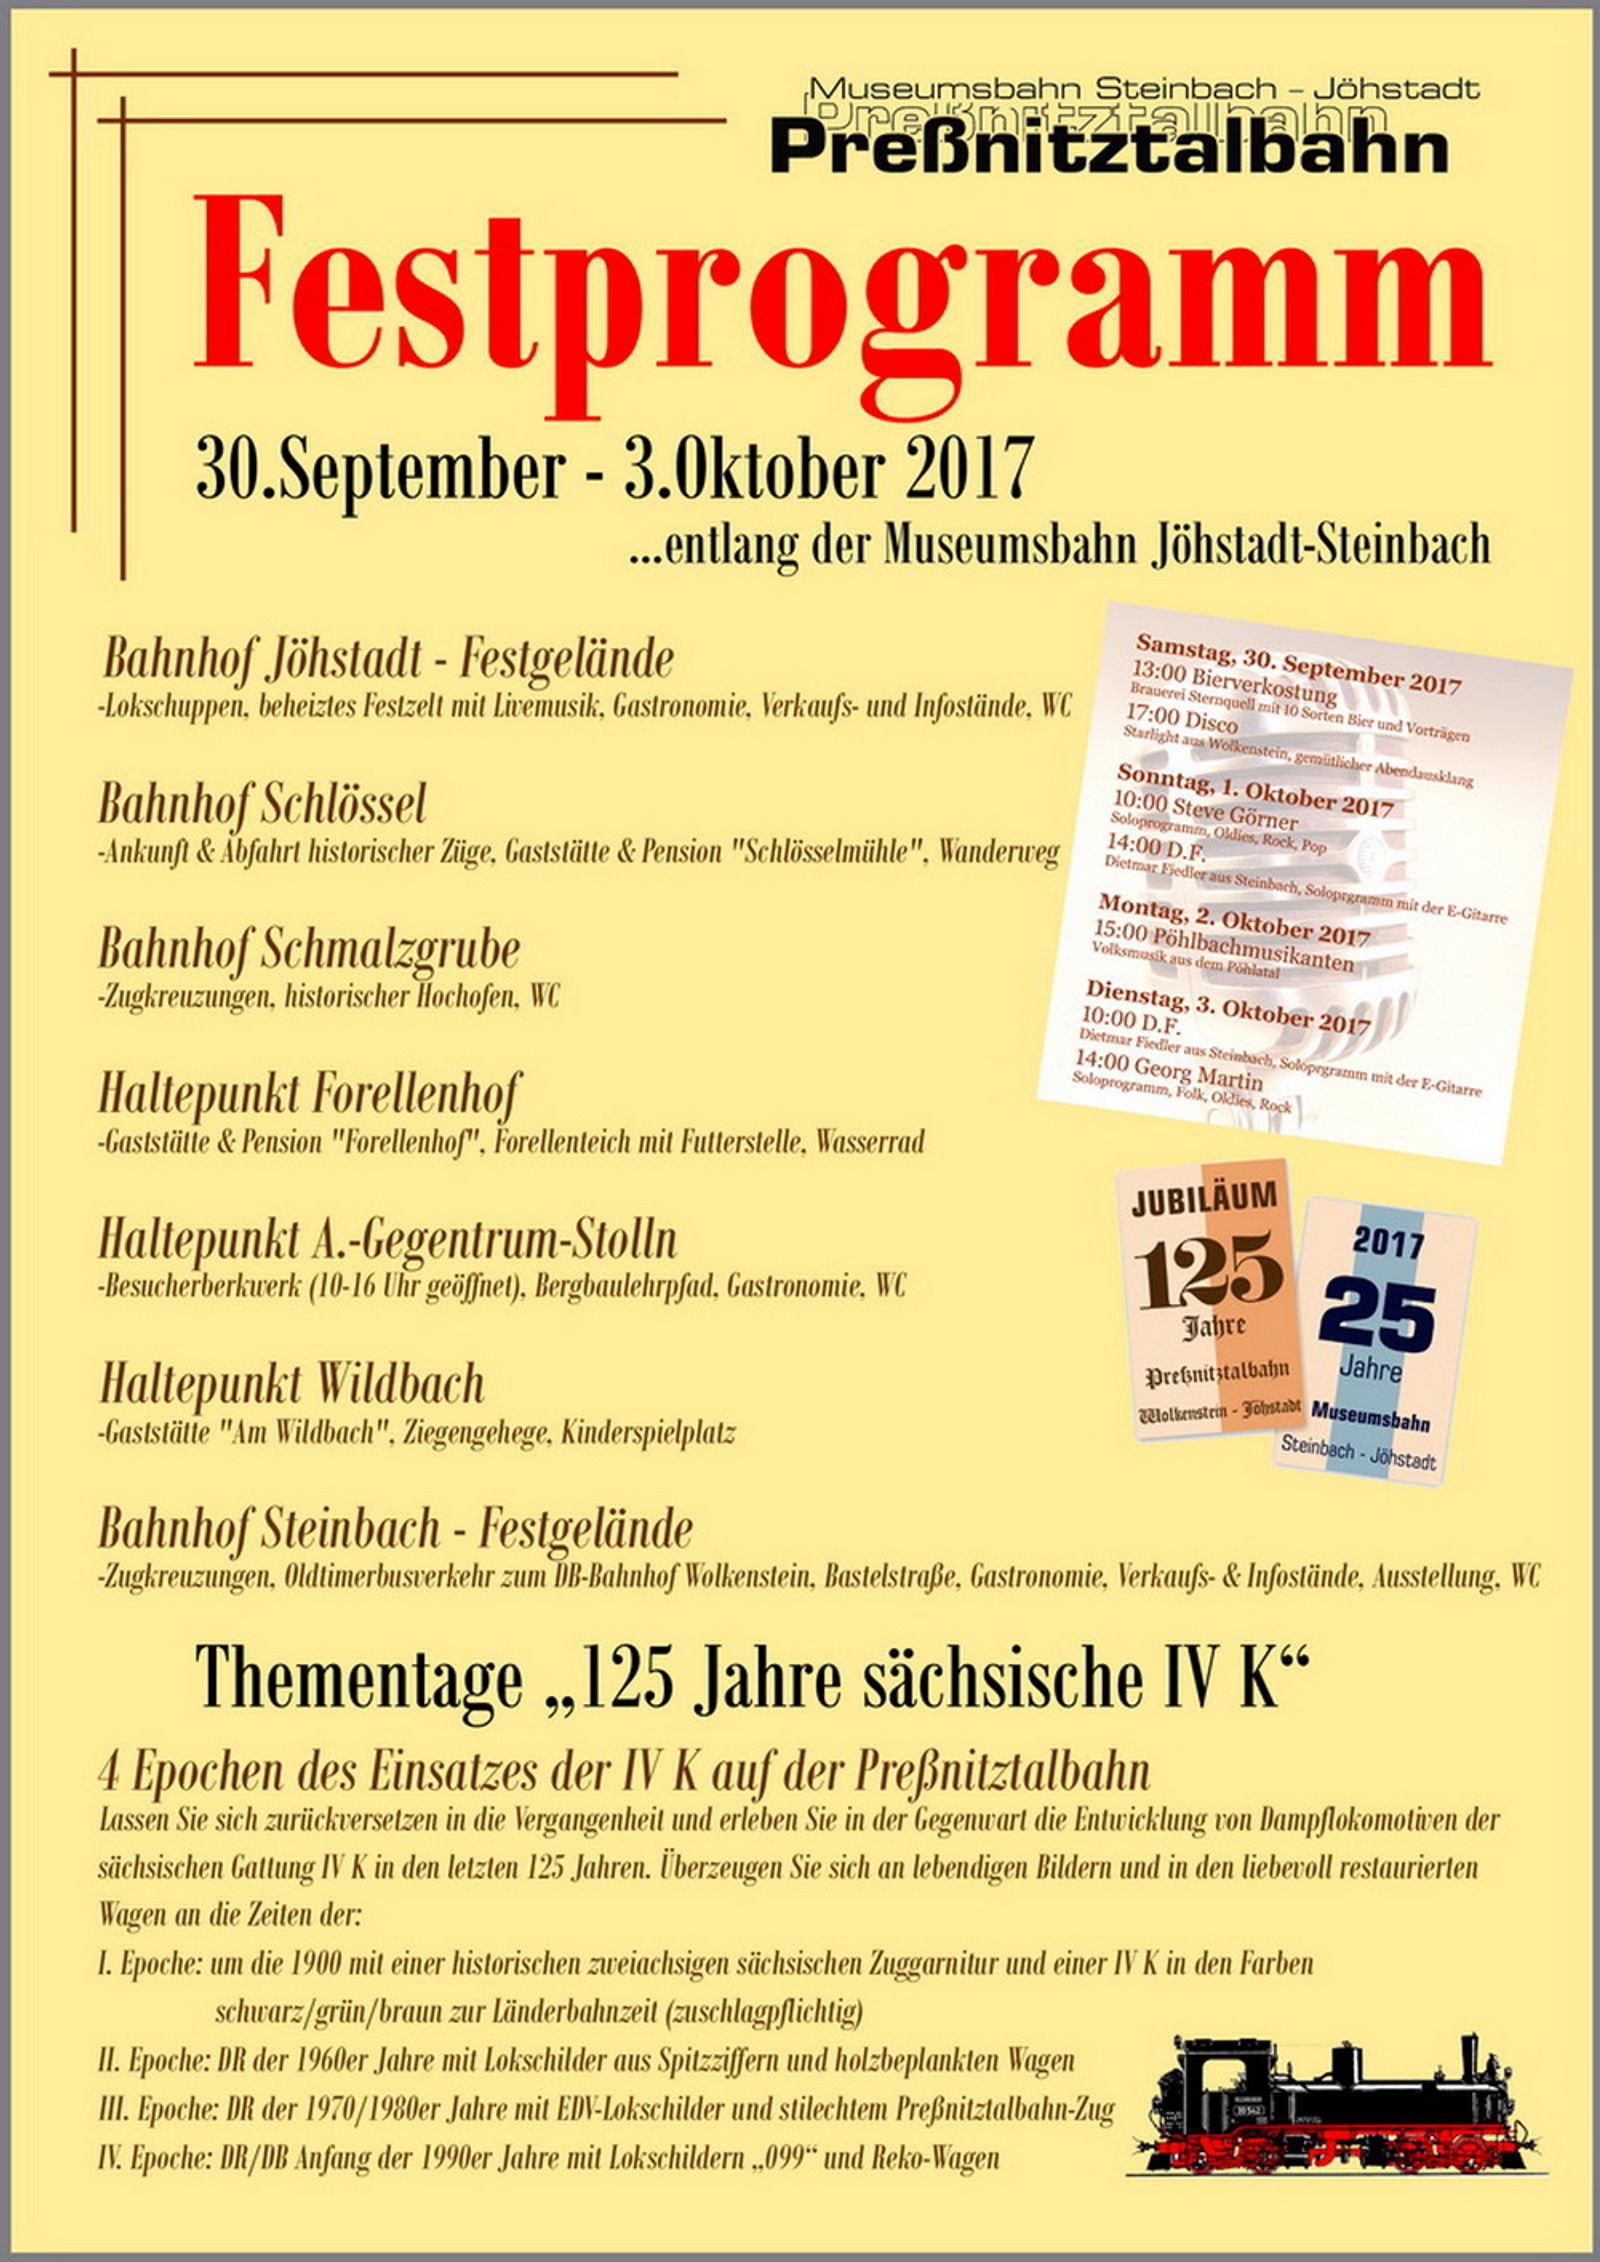 Festprogramm zur Veranstaltung 30. September - 3. Oktober 2017